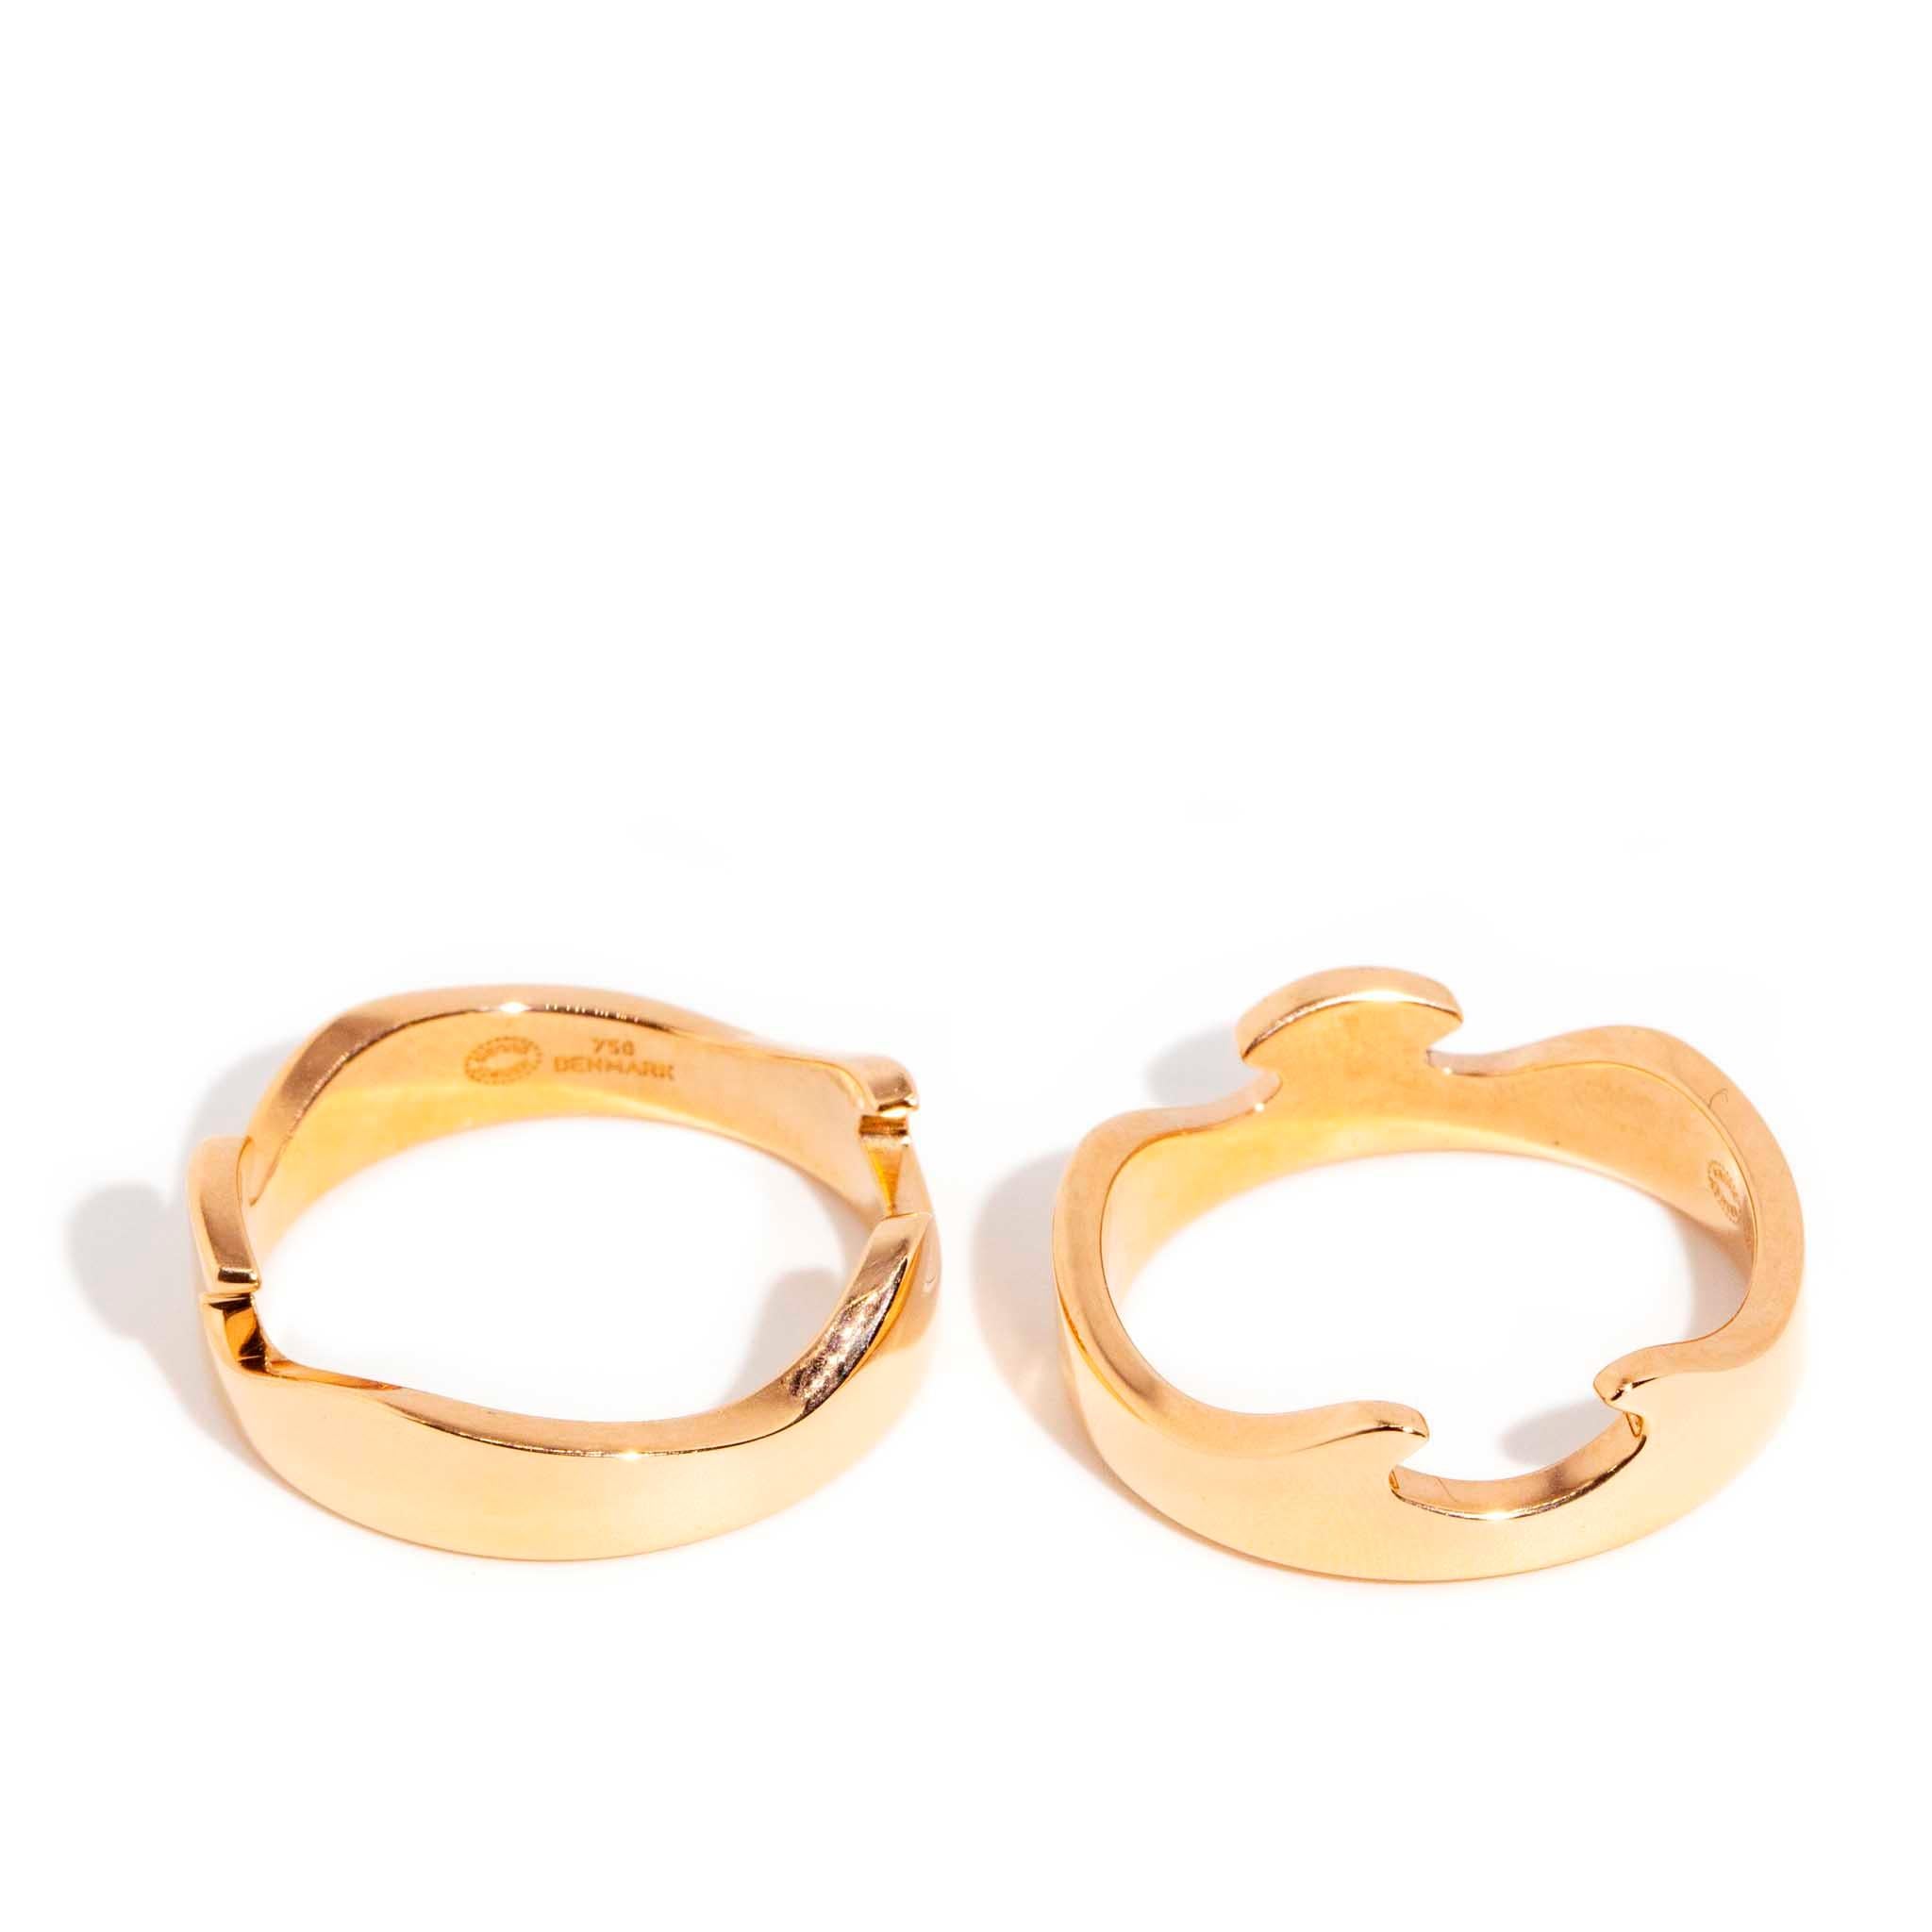 Authentic George Jensen Contemporary 18 Carat Rose Gold Interlocking Fusion Ring 3